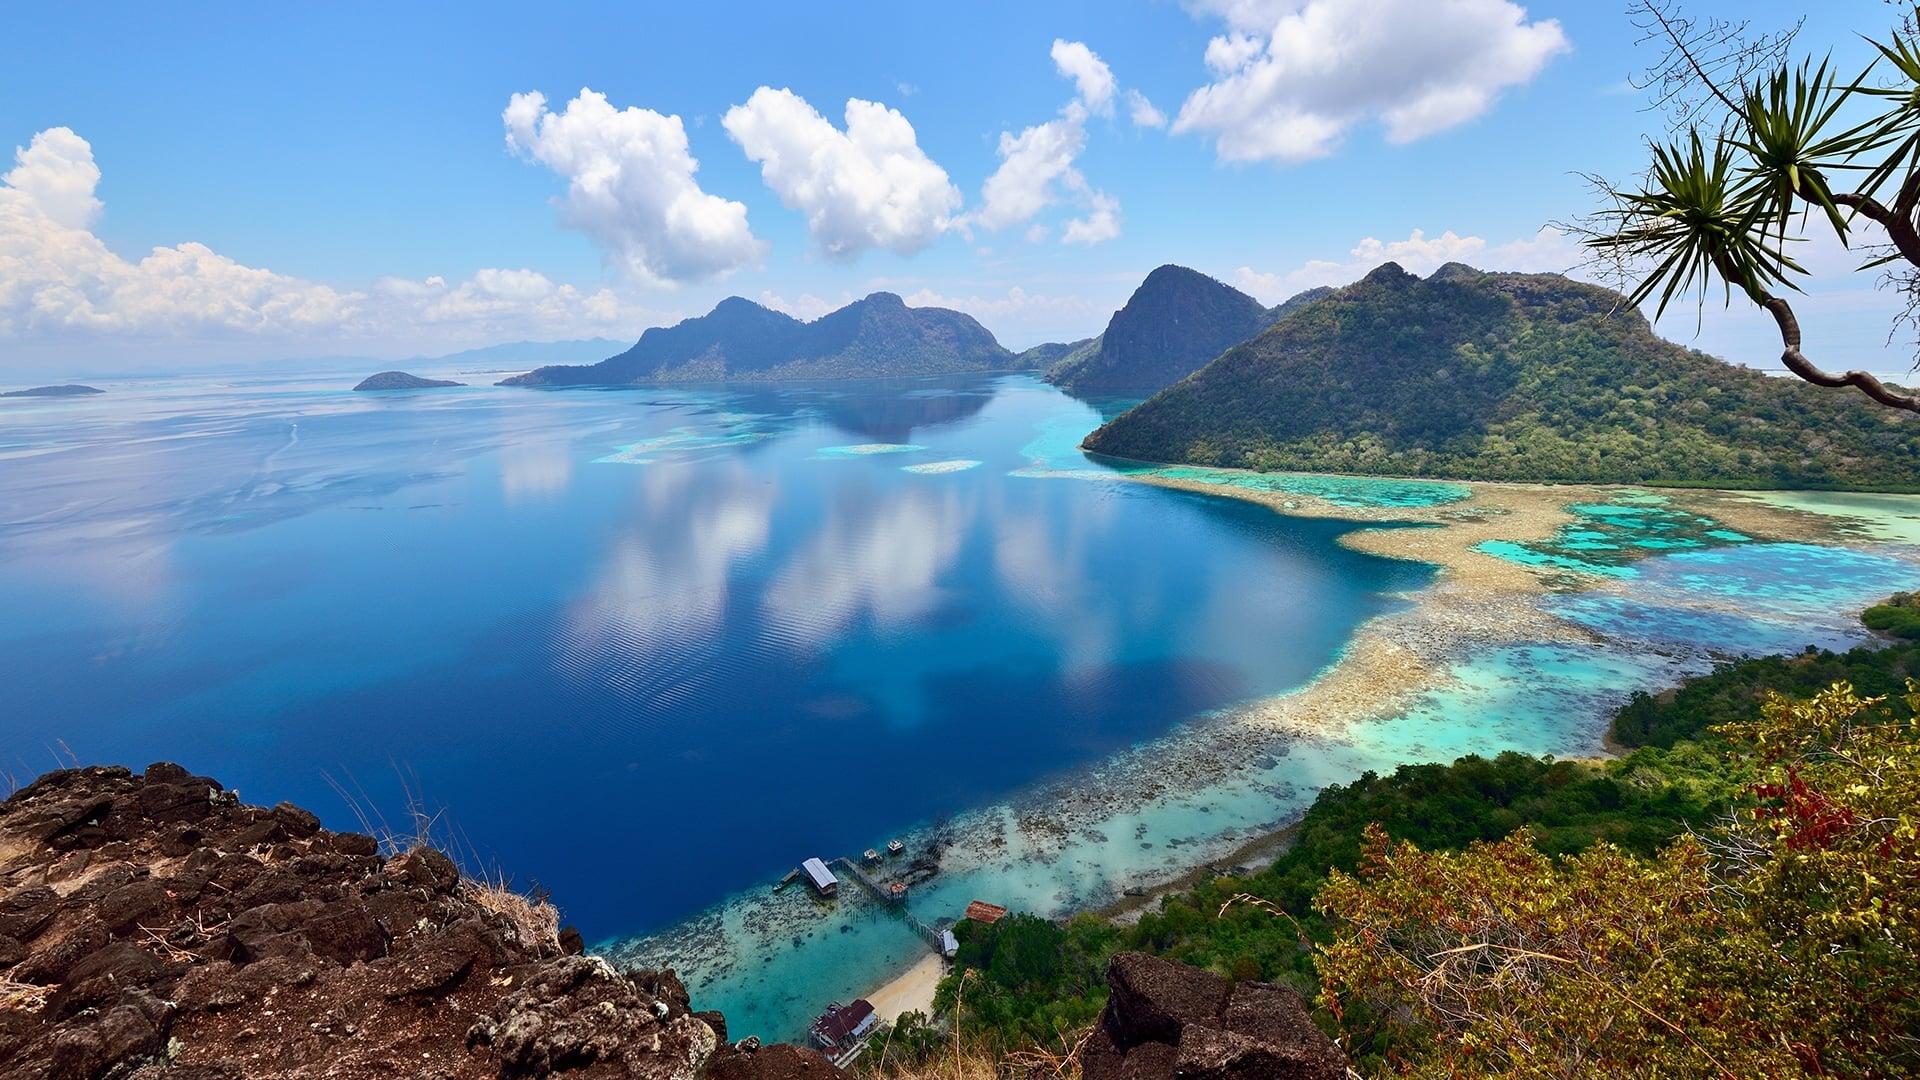 Earth's Tropical Islands backdrop